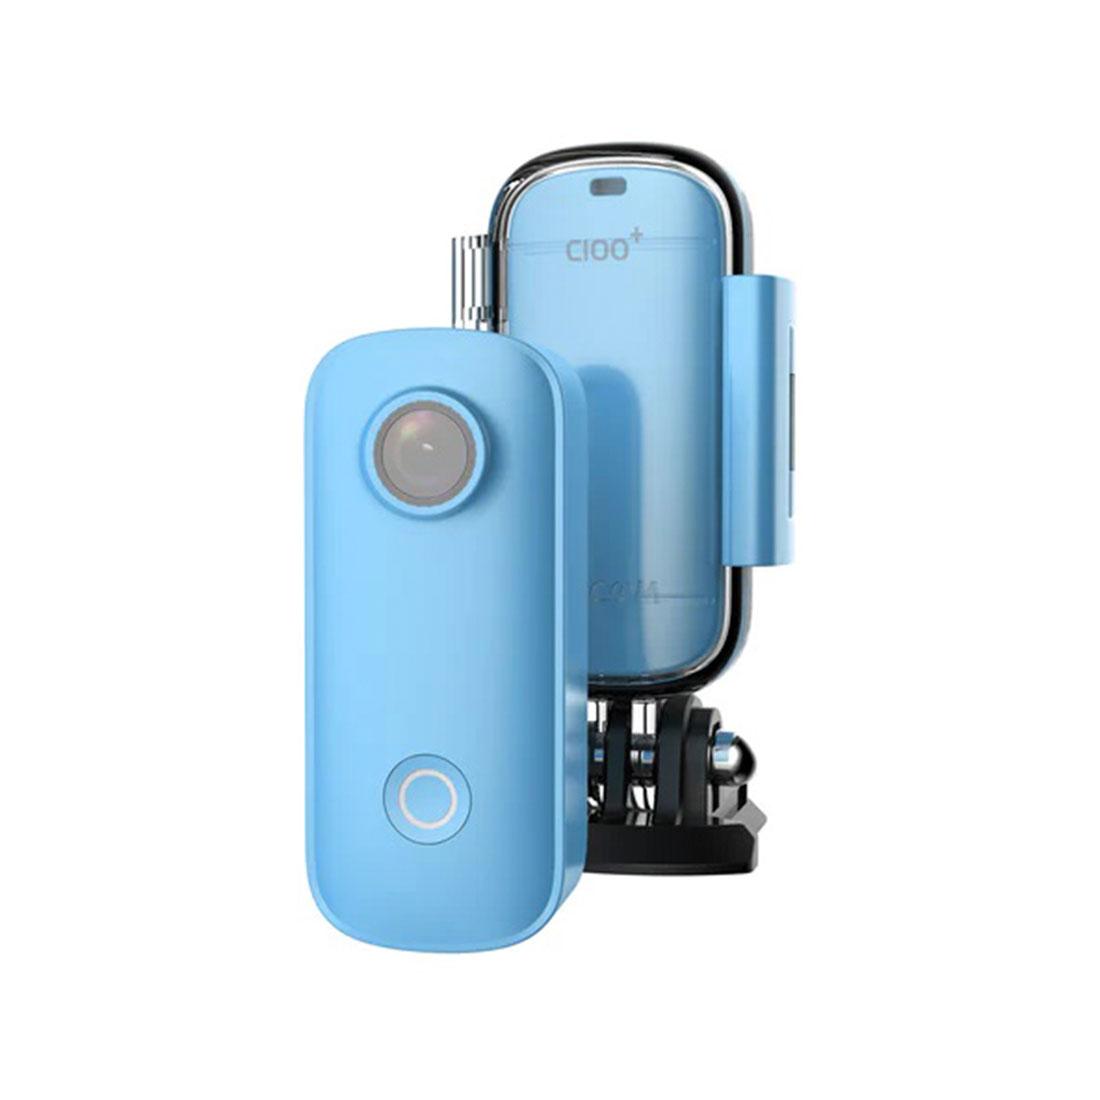 Экшн-камера SJCAM C100+ Blue, фото 1